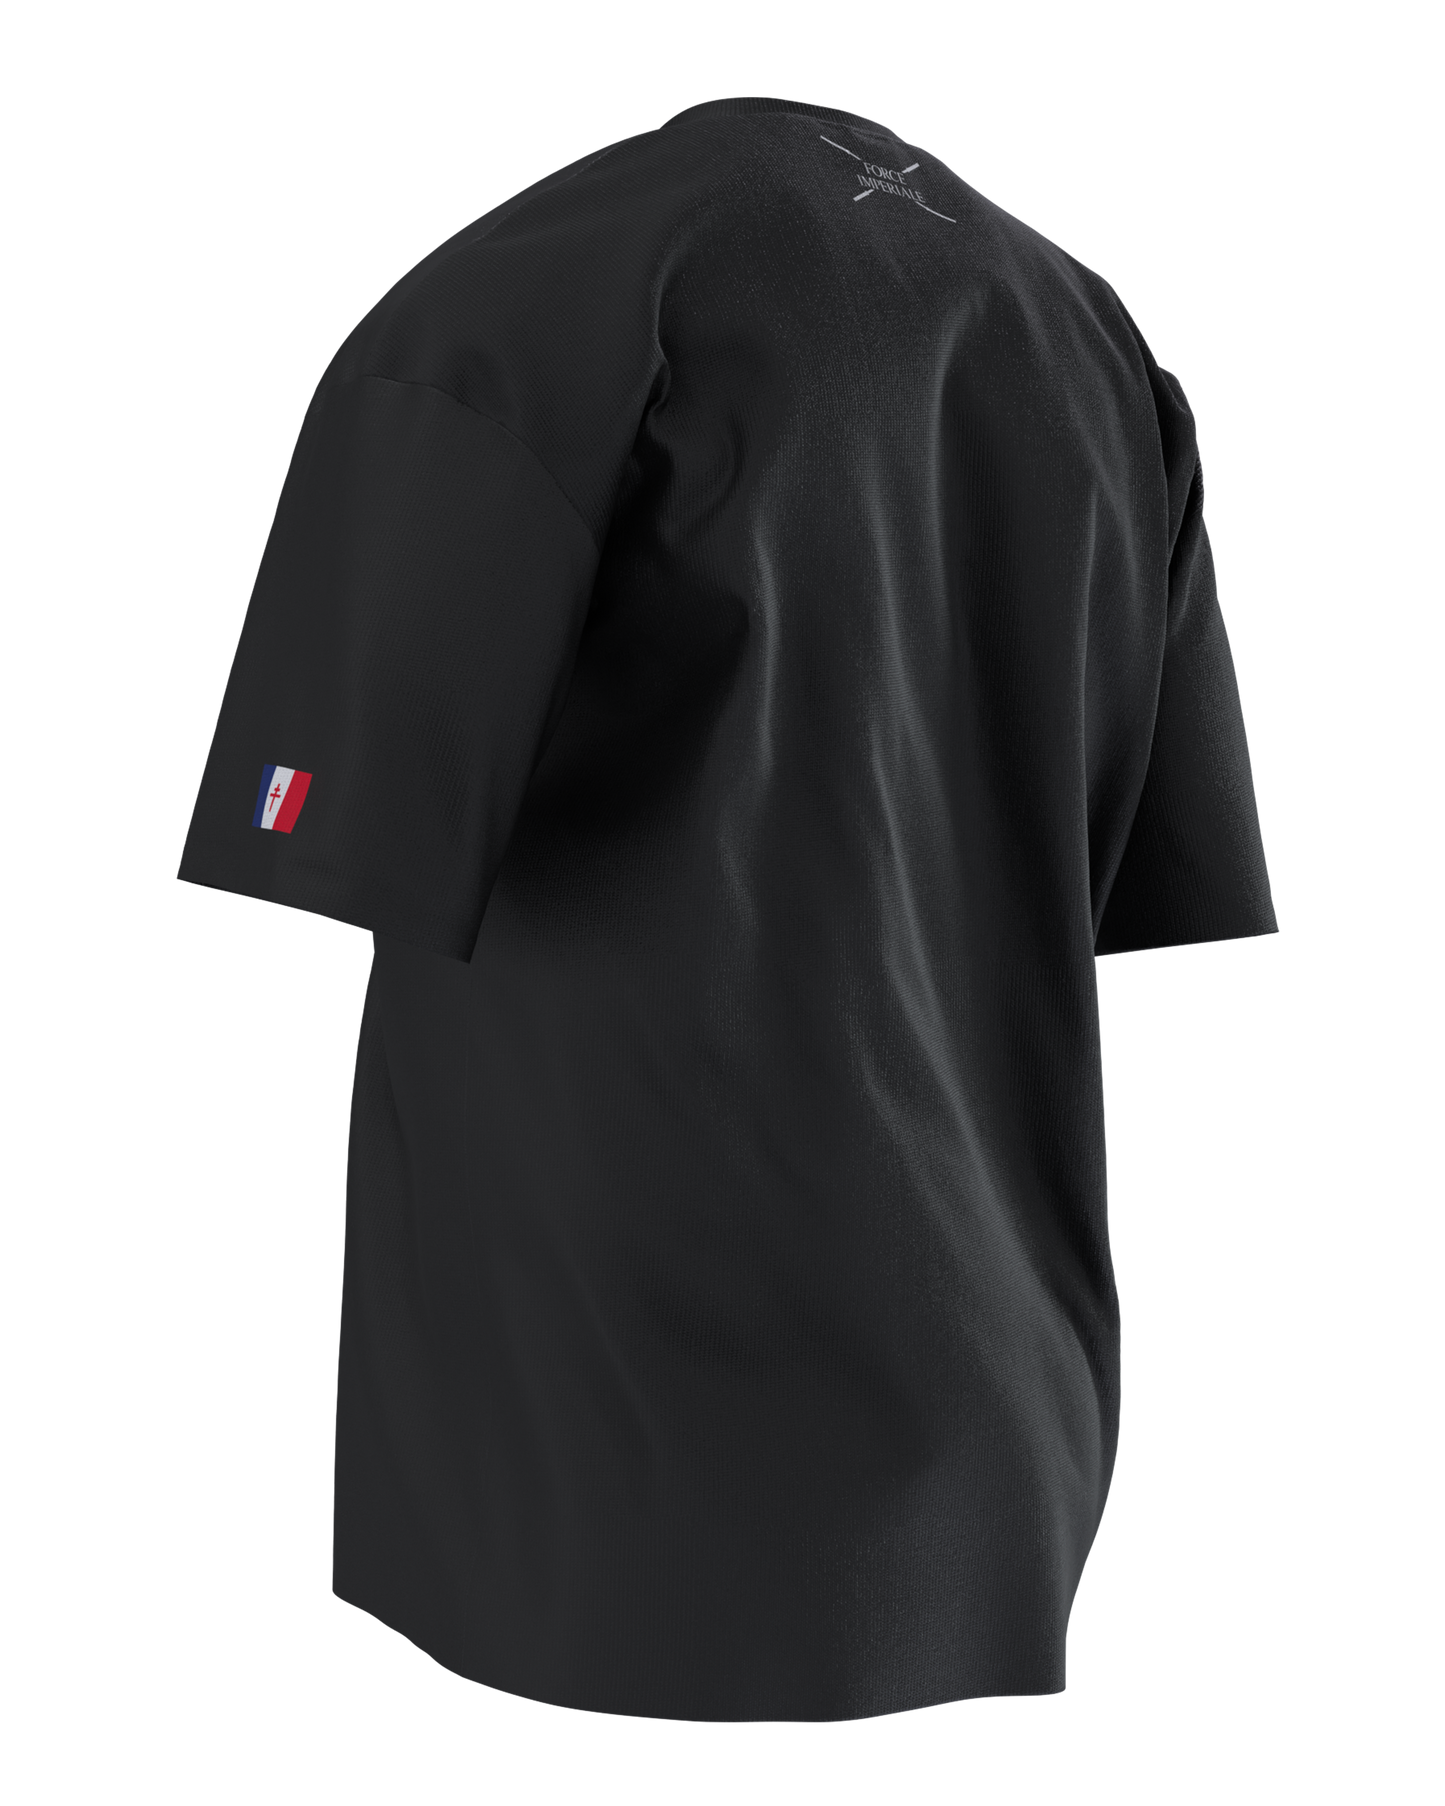 Tee-shirt "Patriote" noir